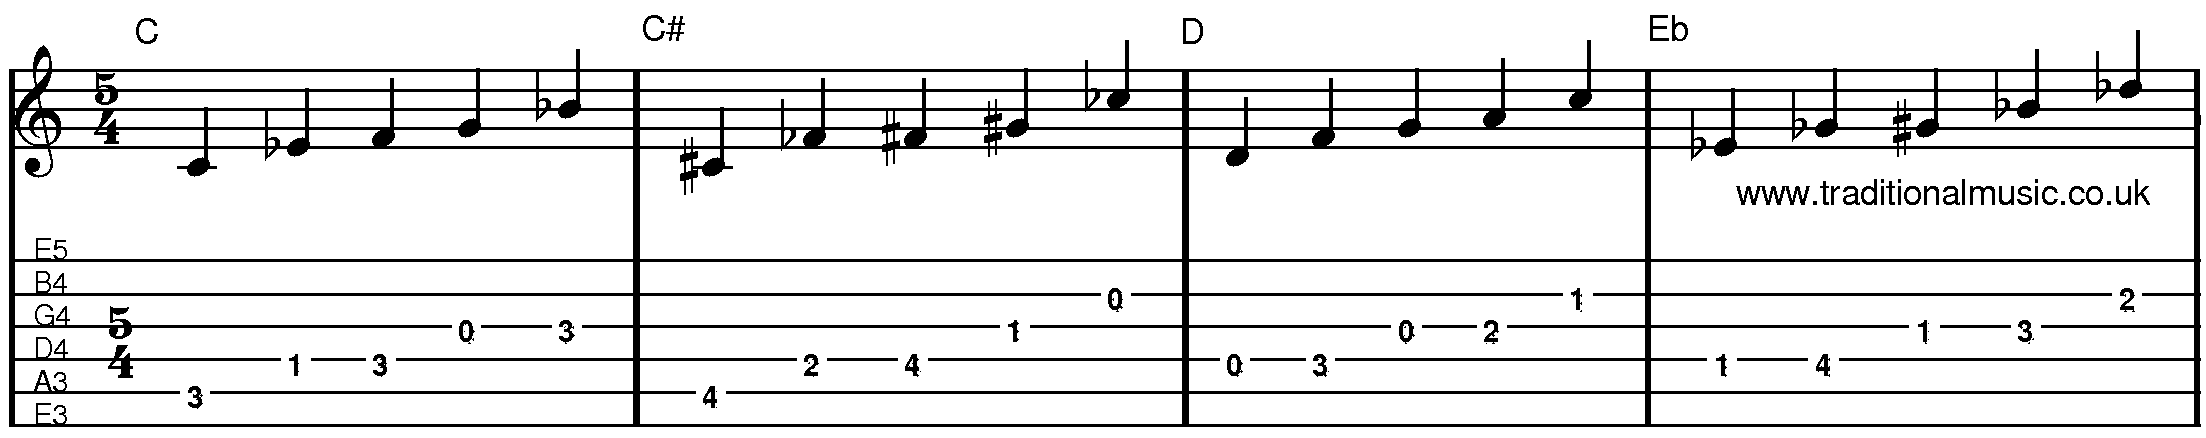 Major Pentatonic Scales Guitar in standard tuning C-Eb